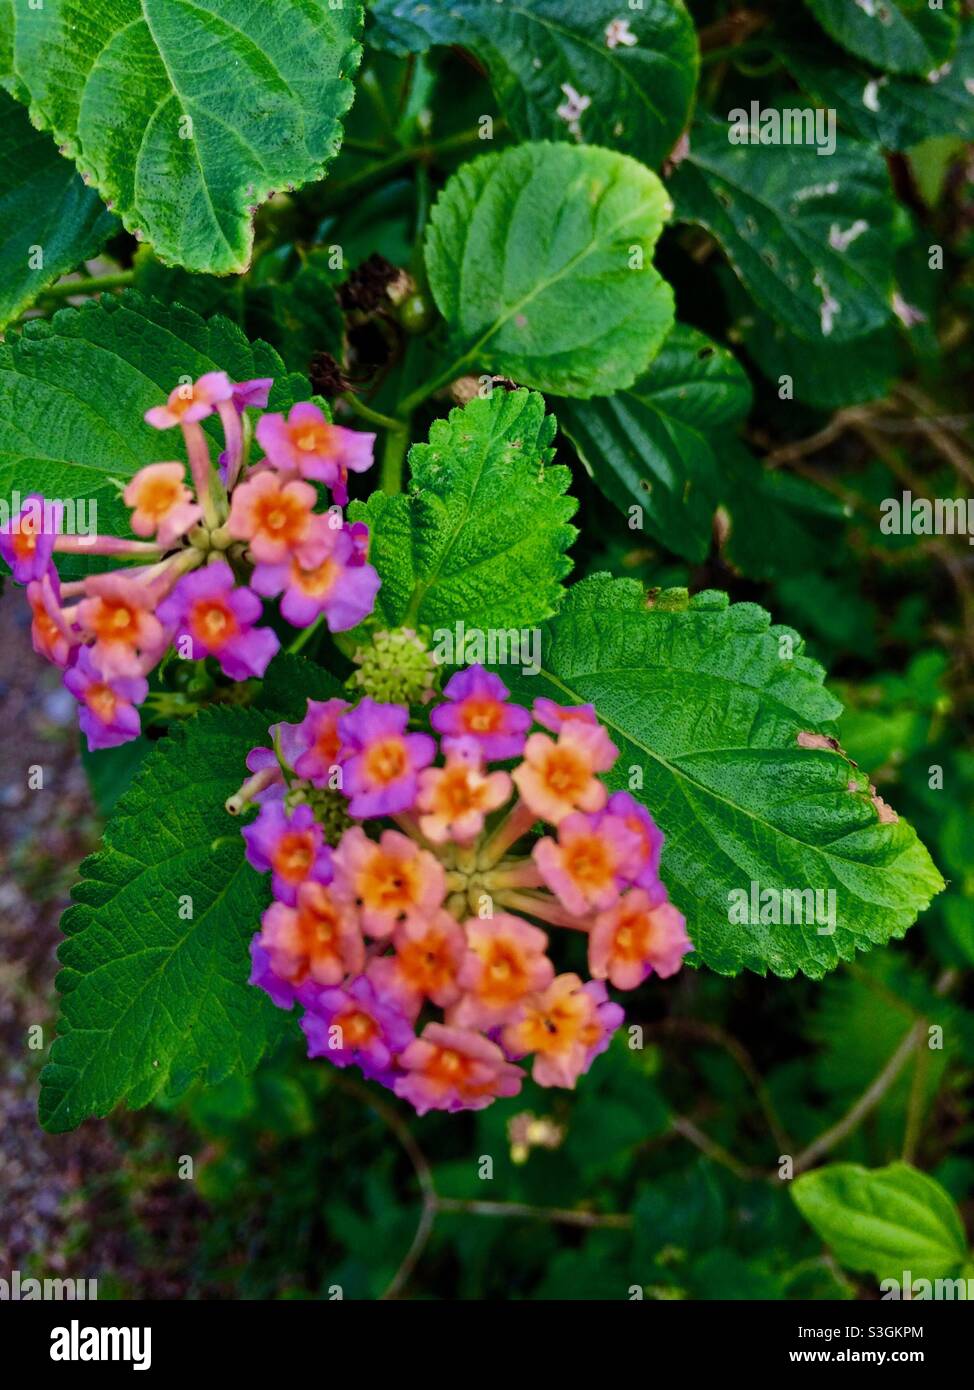 Lantana Camara-species of flowering plant within the verbena family. Stock Photo